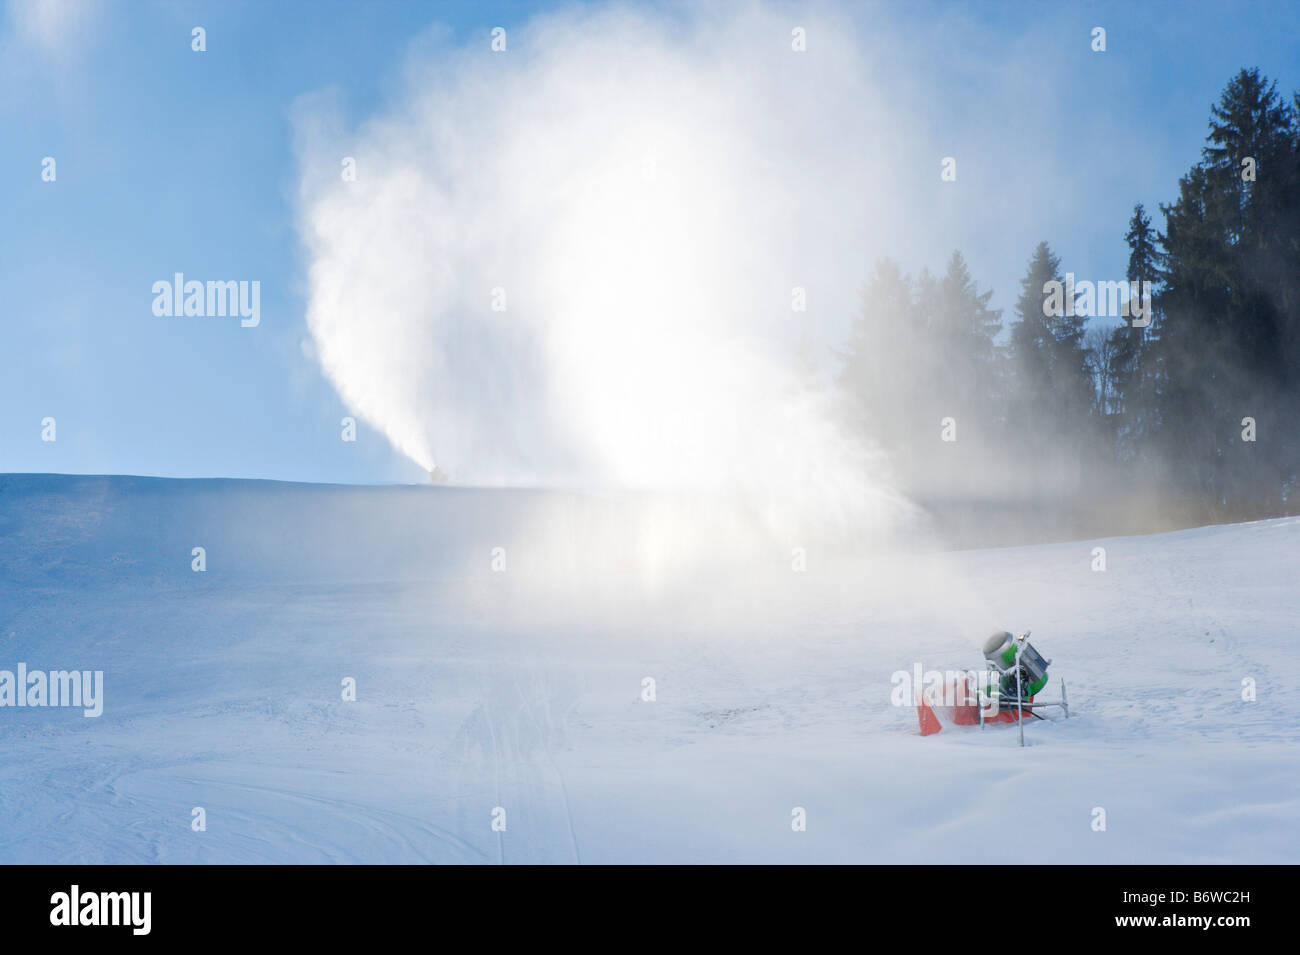 snow machine cannon snowmaker gun 11967005 Stock Photo at Vecteezy